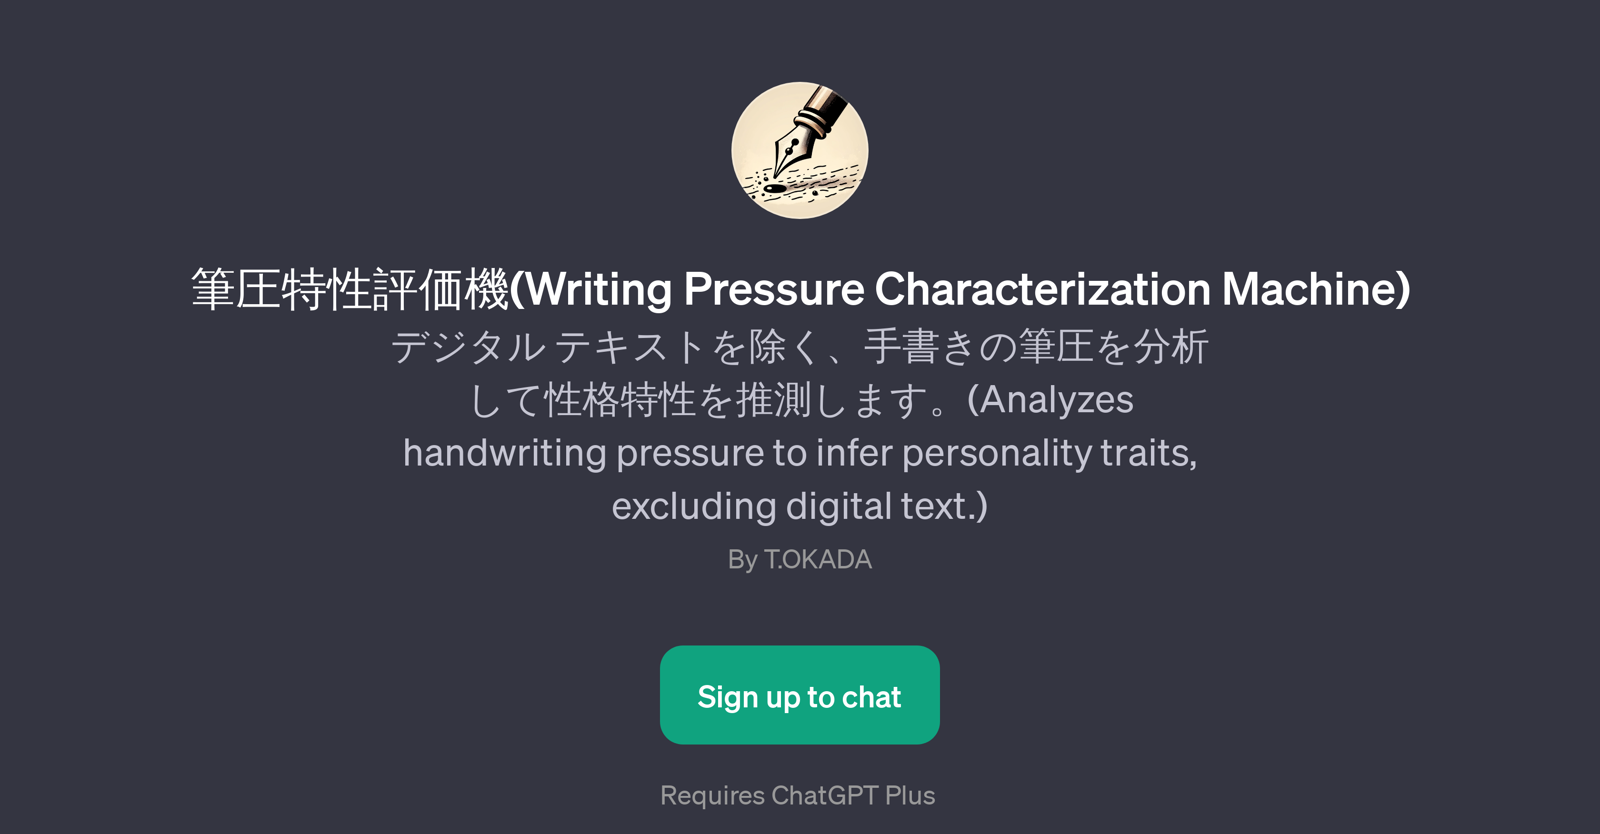 Writing Pressure Characterization Machine website